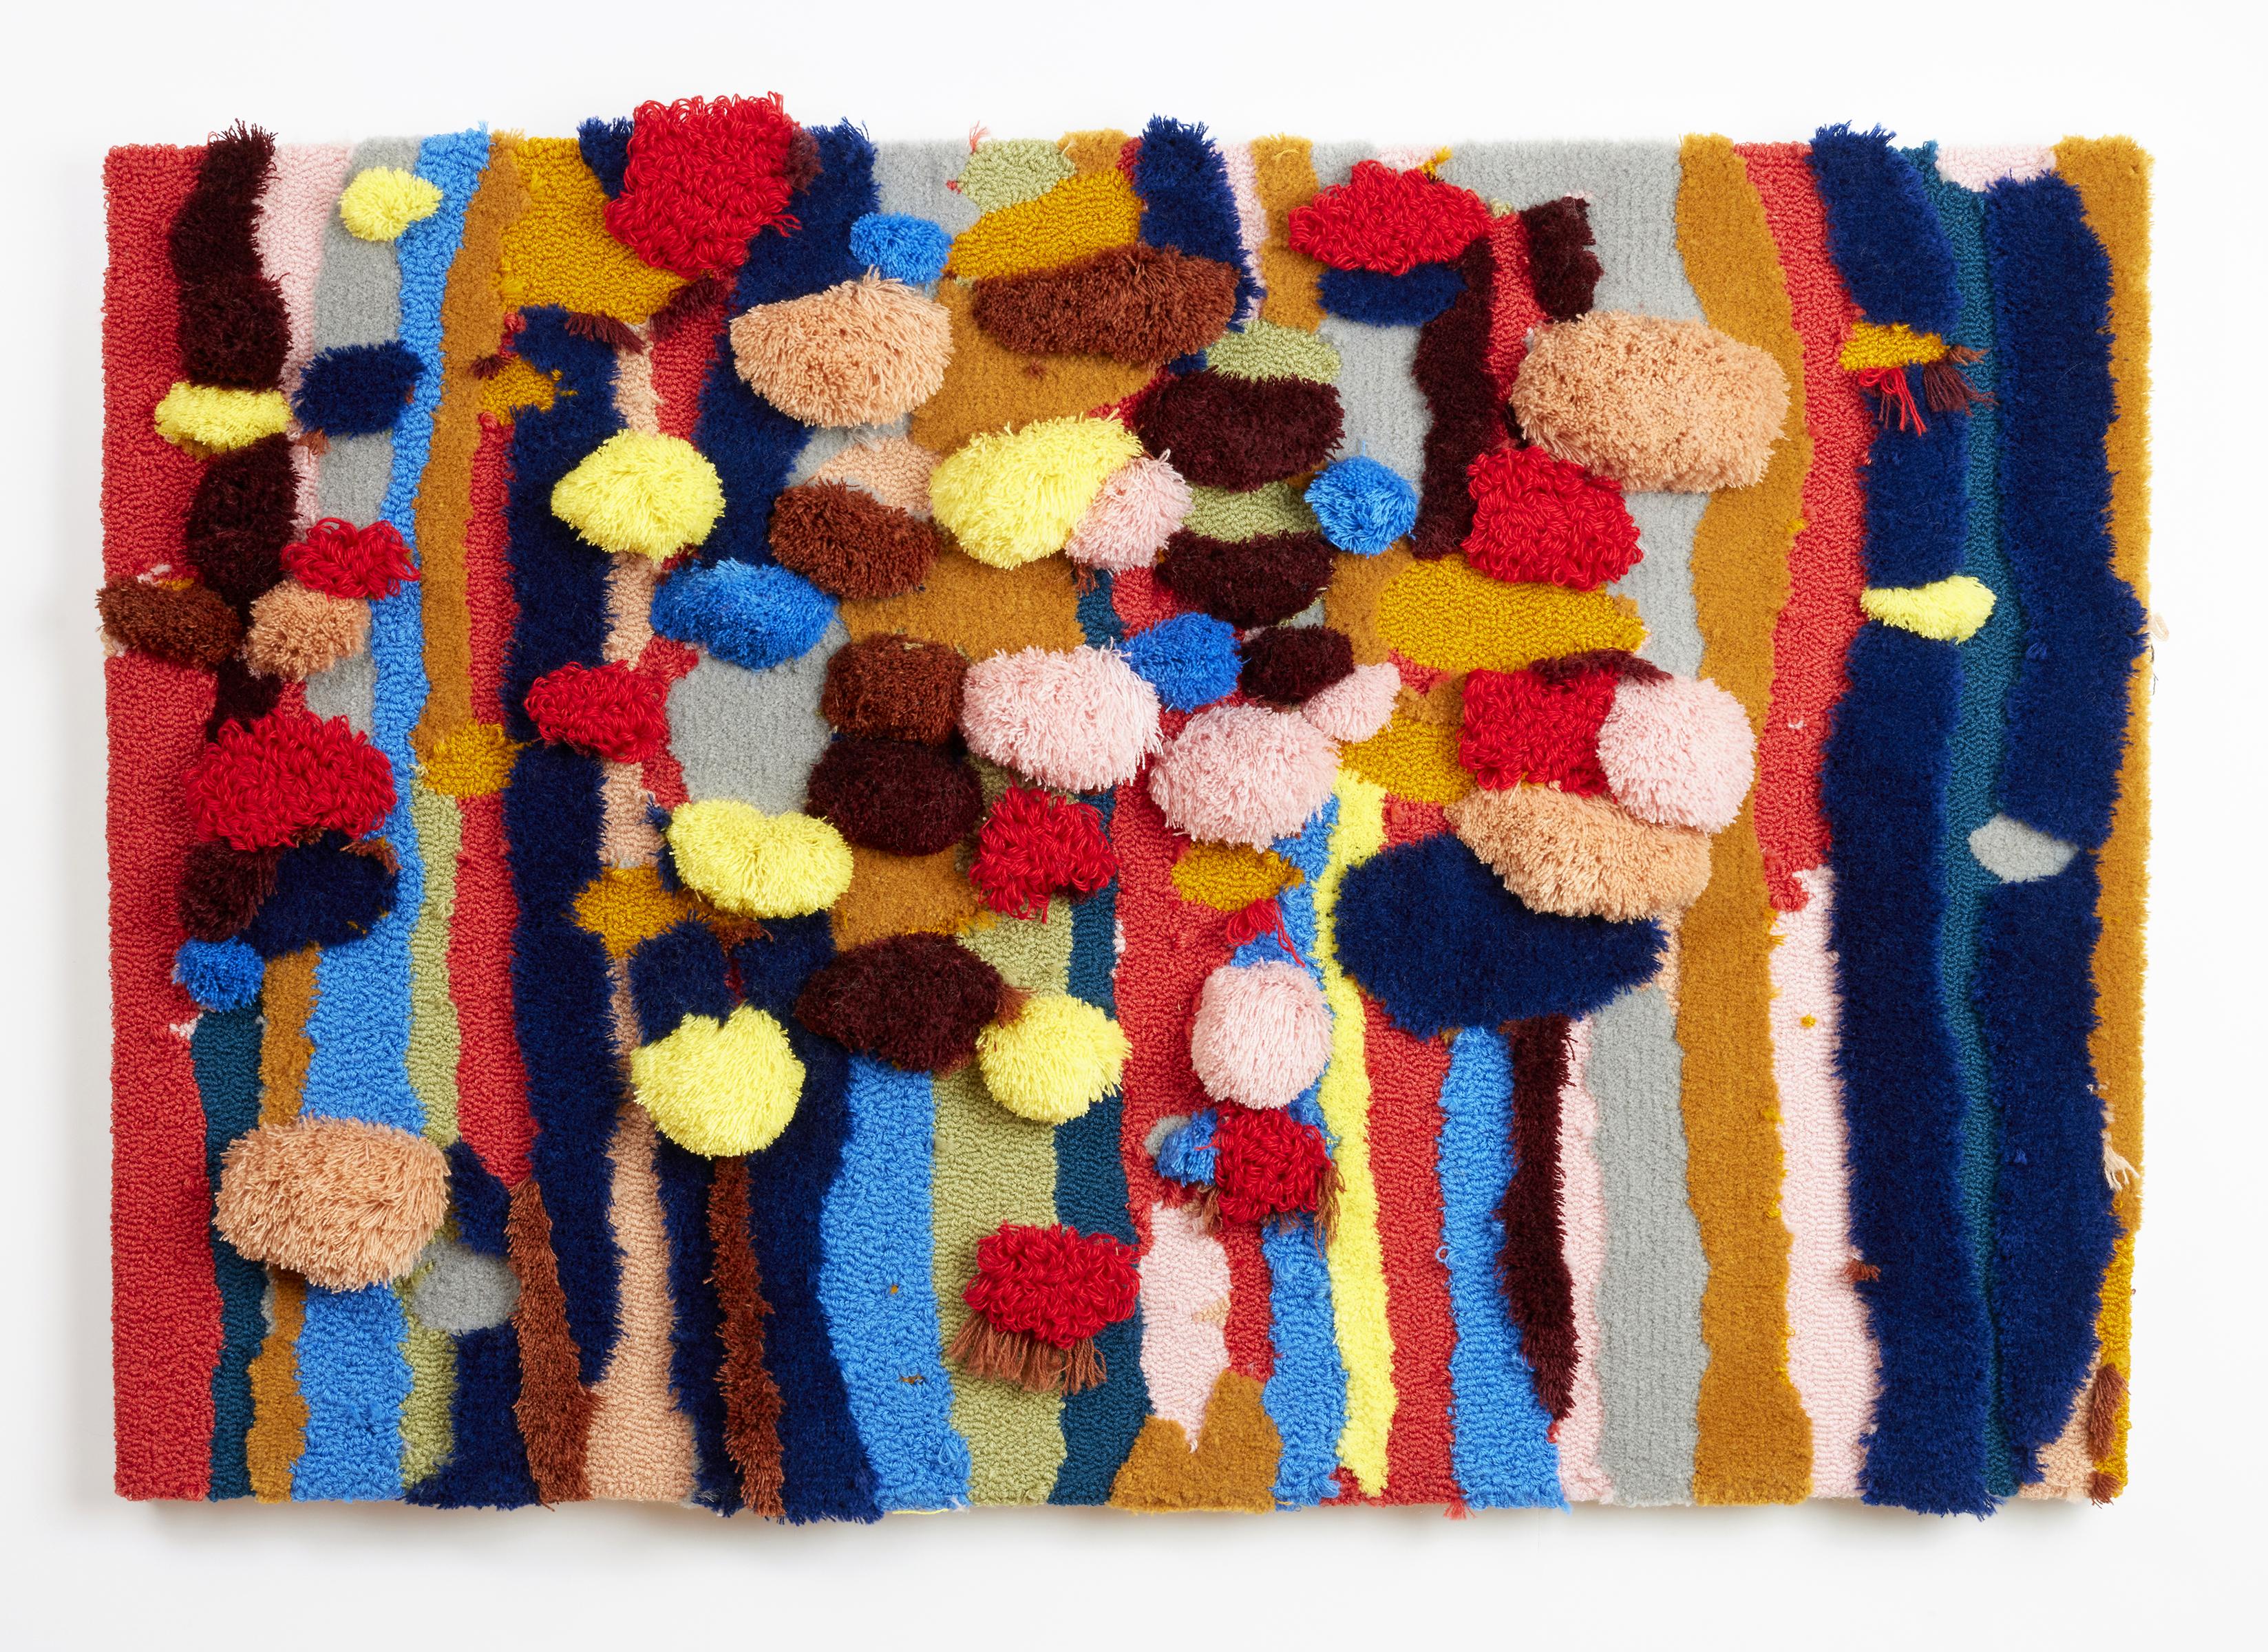 'Merrily, Merrily, Merrily, Merrily' - contemporary fiber art, pattern, abstract - Mixed Media Art by Trish Andersen